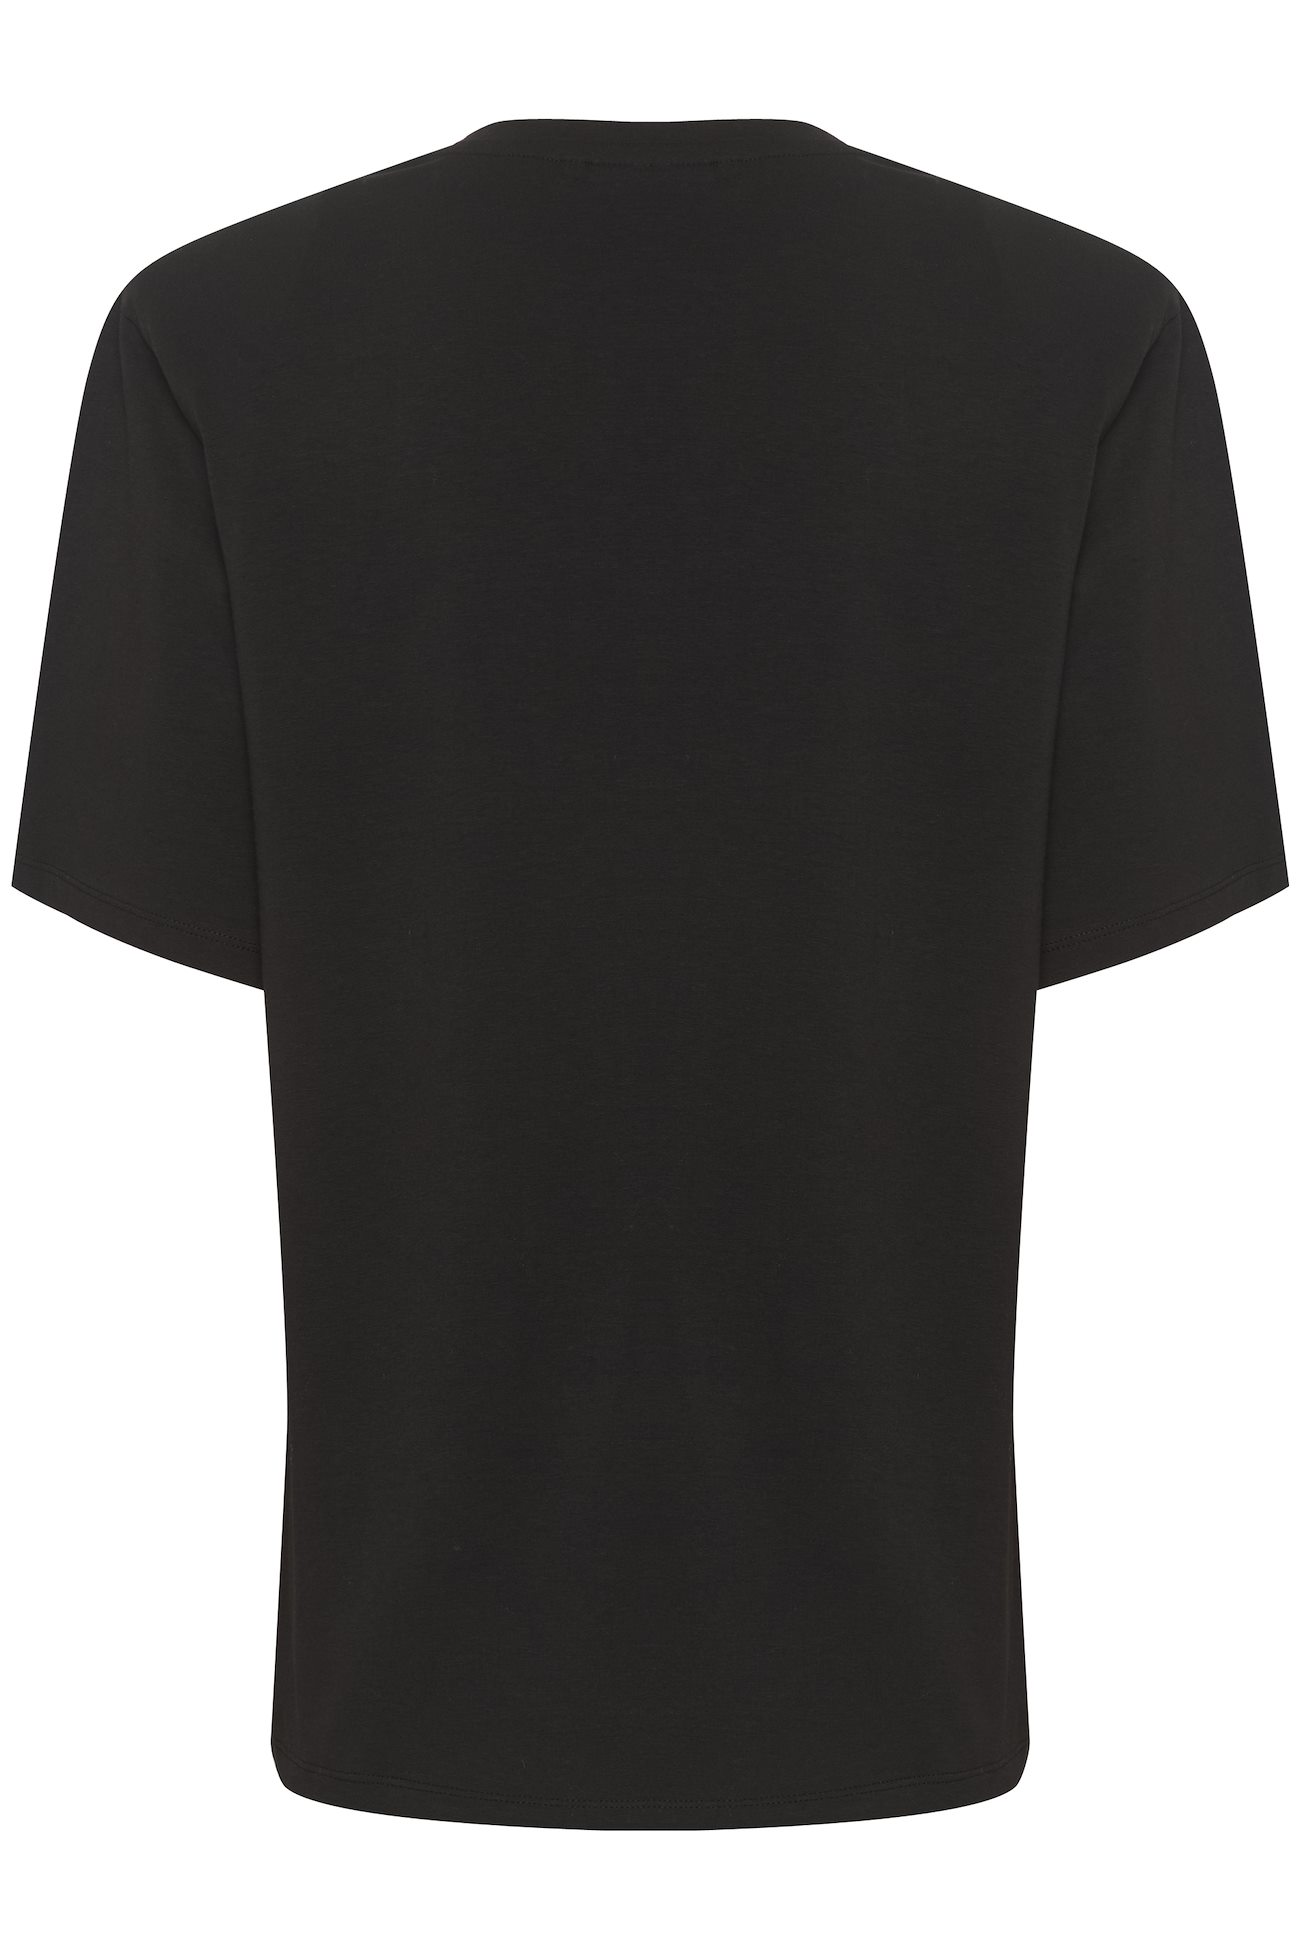 black-samurillygz-t-shirt-2.jpg